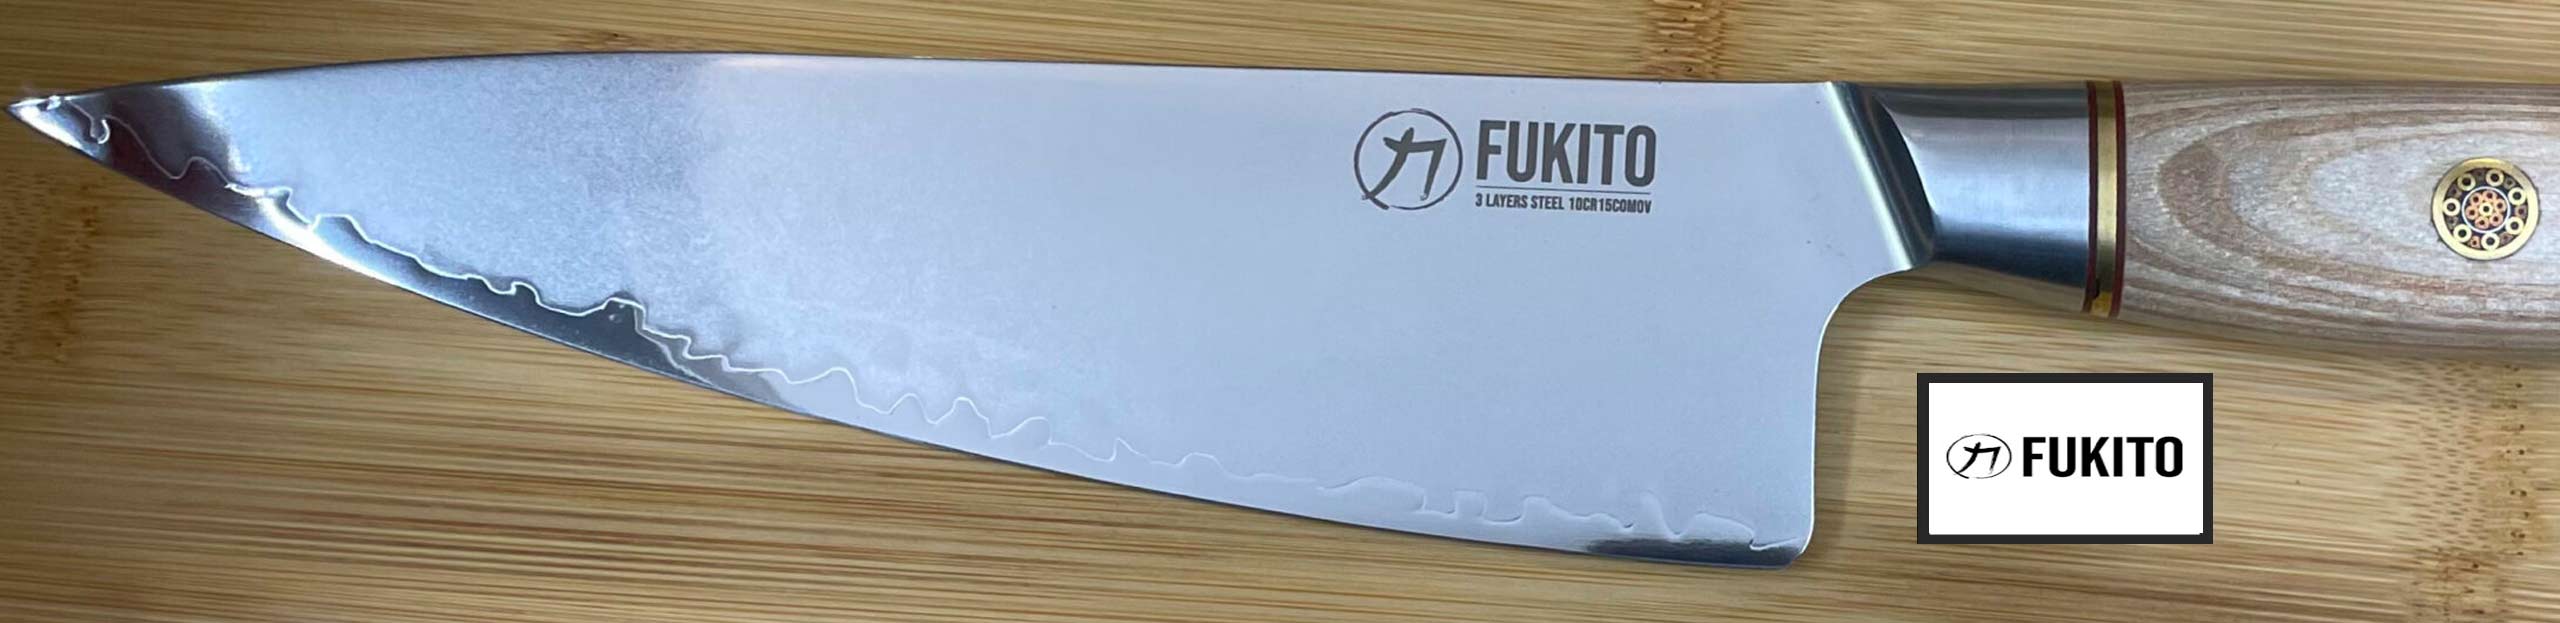 couteau japonais Fukito